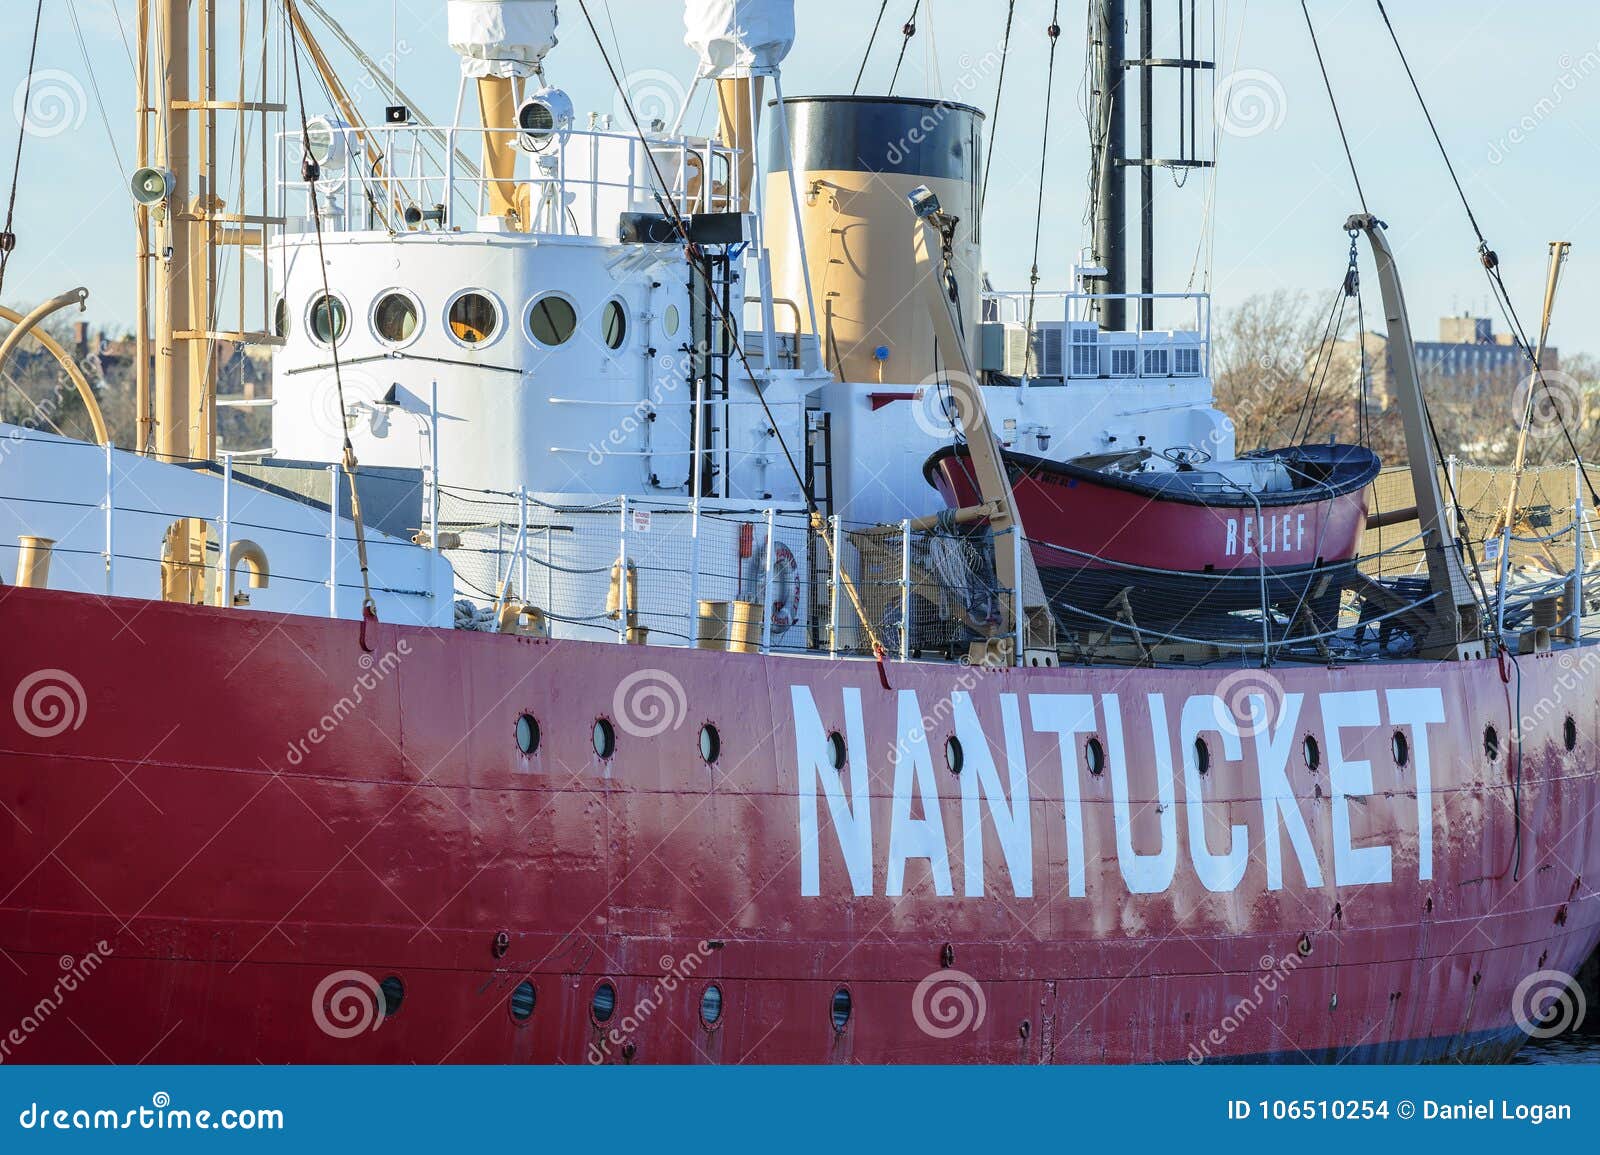 14 Nantucket Lightship Images, Stock Photos & Vectors